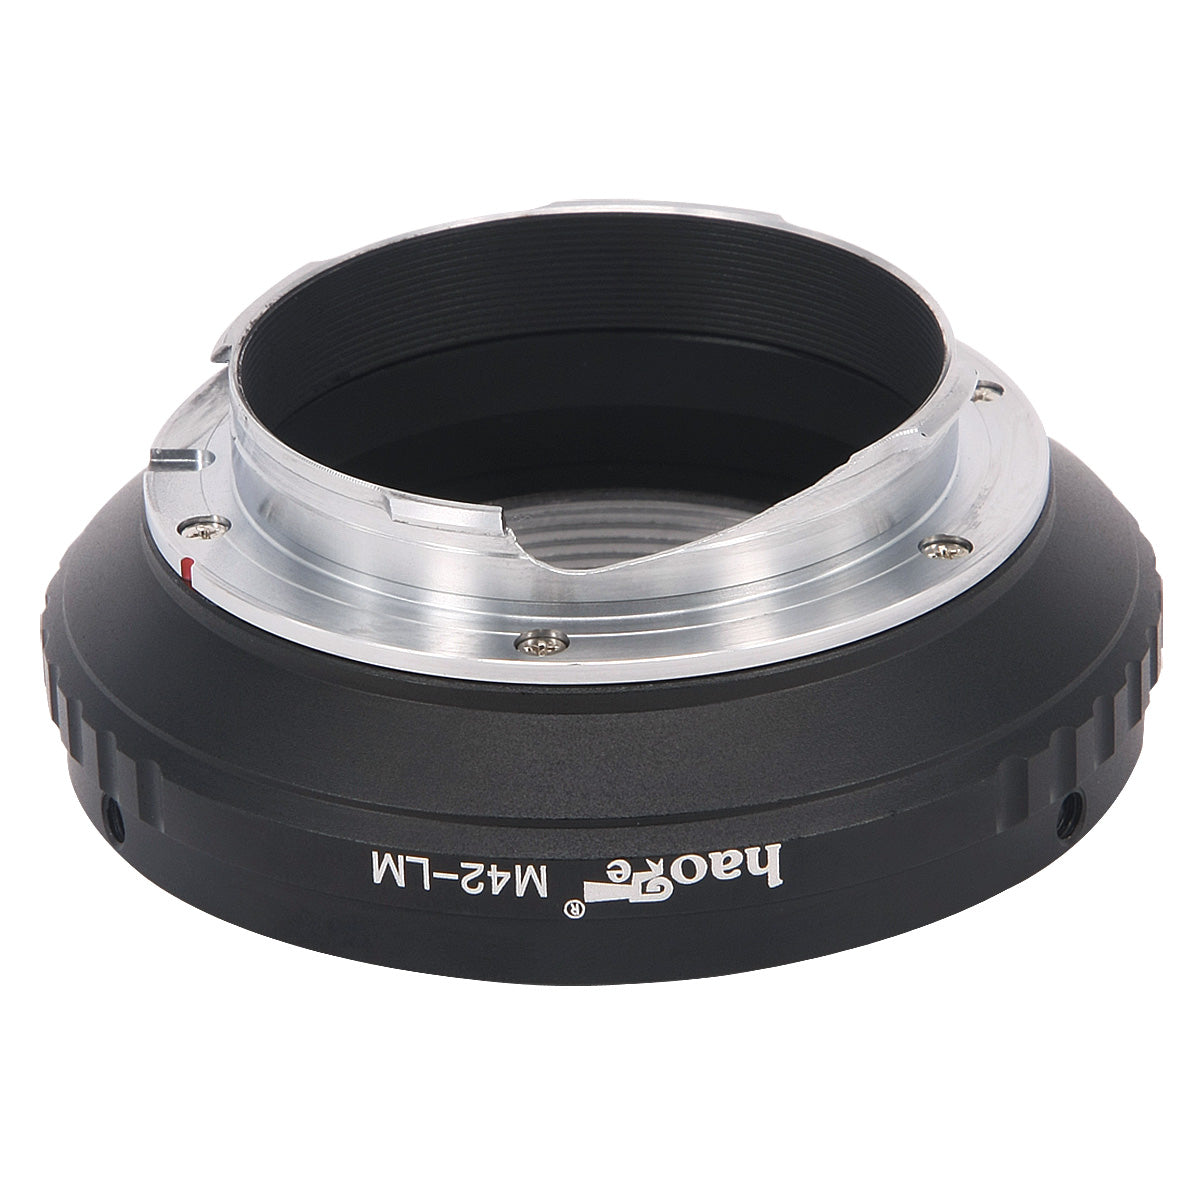 Haoge Lens Mount Adapter for M42 Screw mount Lens to Leica M-mount Camera such as M240, M240P, M262, M3, M2, M1, M4, M5, CL, M6, MP, M7, M8, M9, M9-P, M Monochrom, M-E, M, M-P, M10, M-A